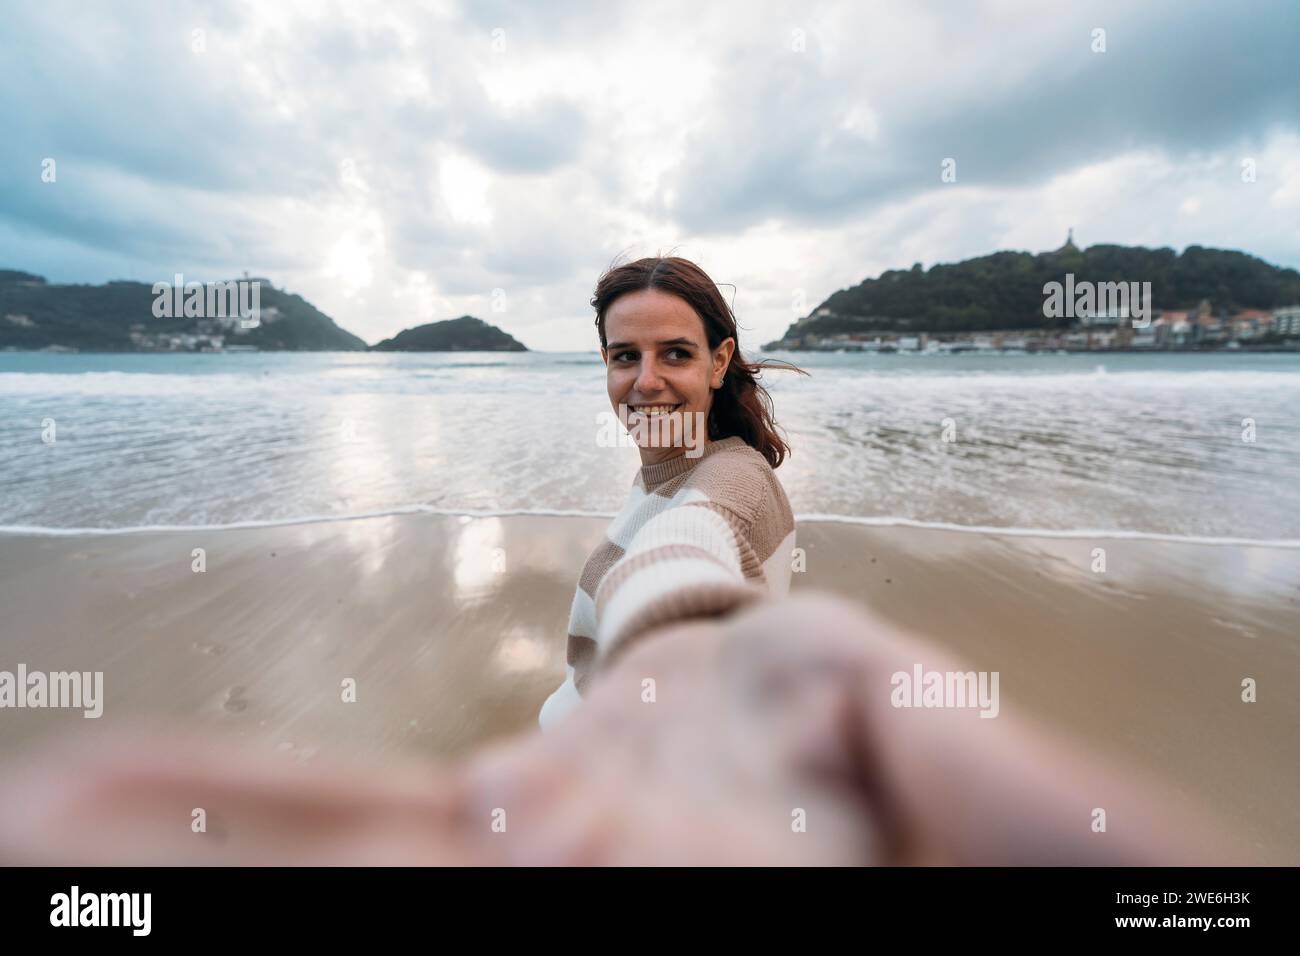 Young woman at Playa de la Concha shore under cloudy sky Stock Photo